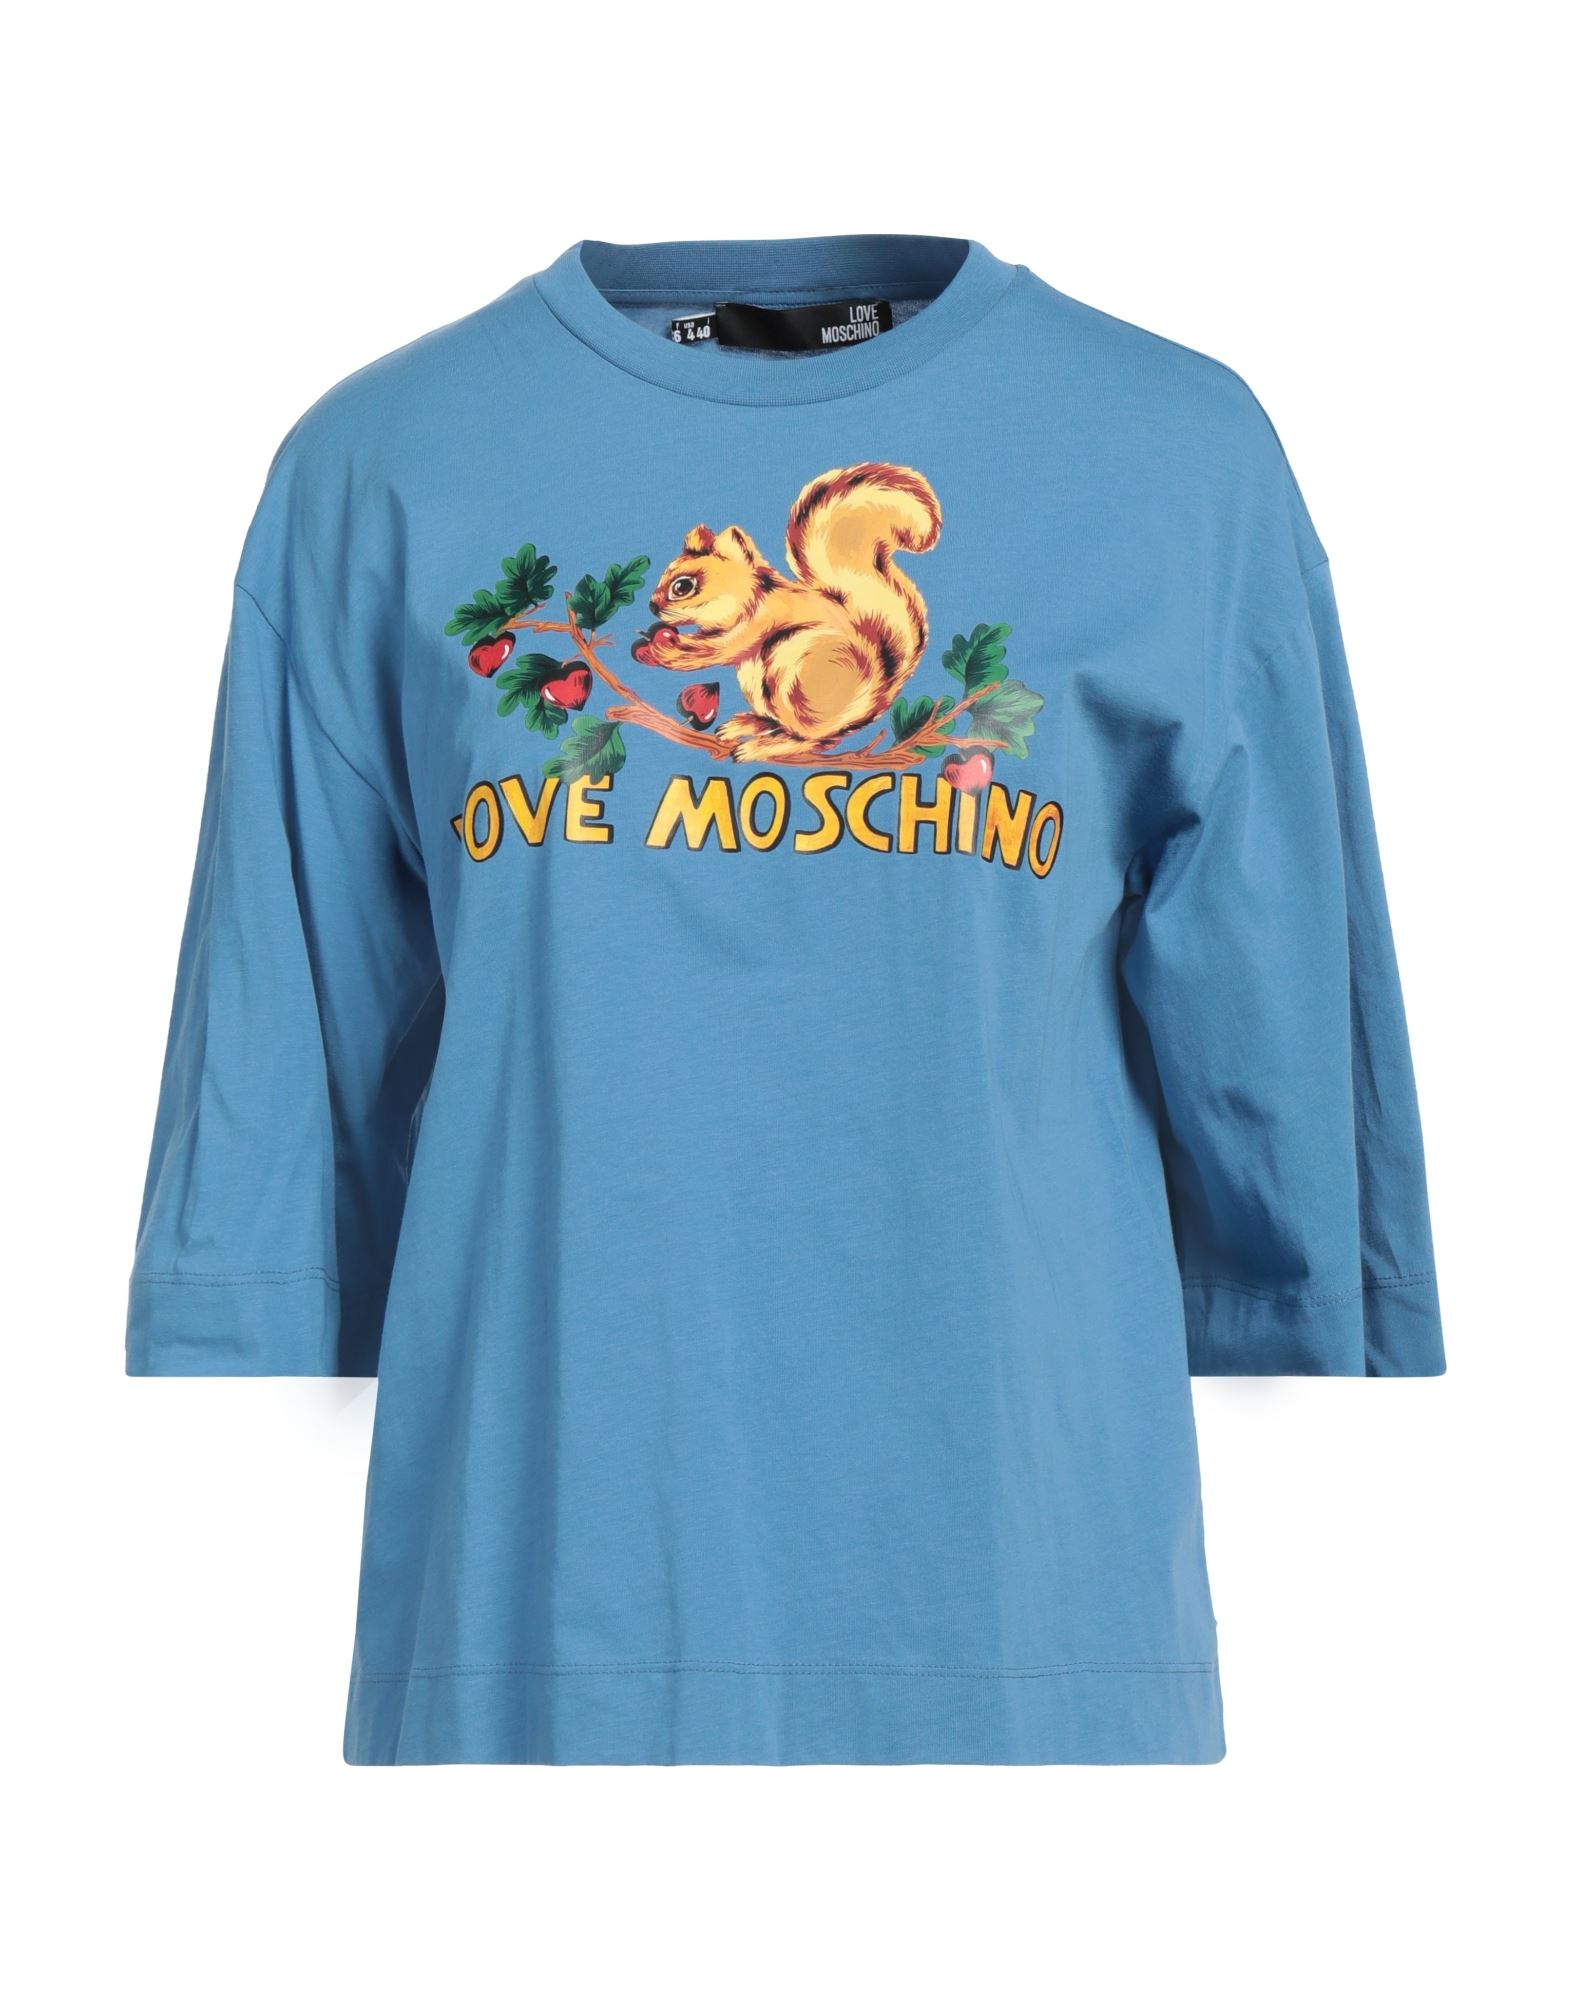 LOVE MOSCHINO T-shirts Damen Azurblau von LOVE MOSCHINO